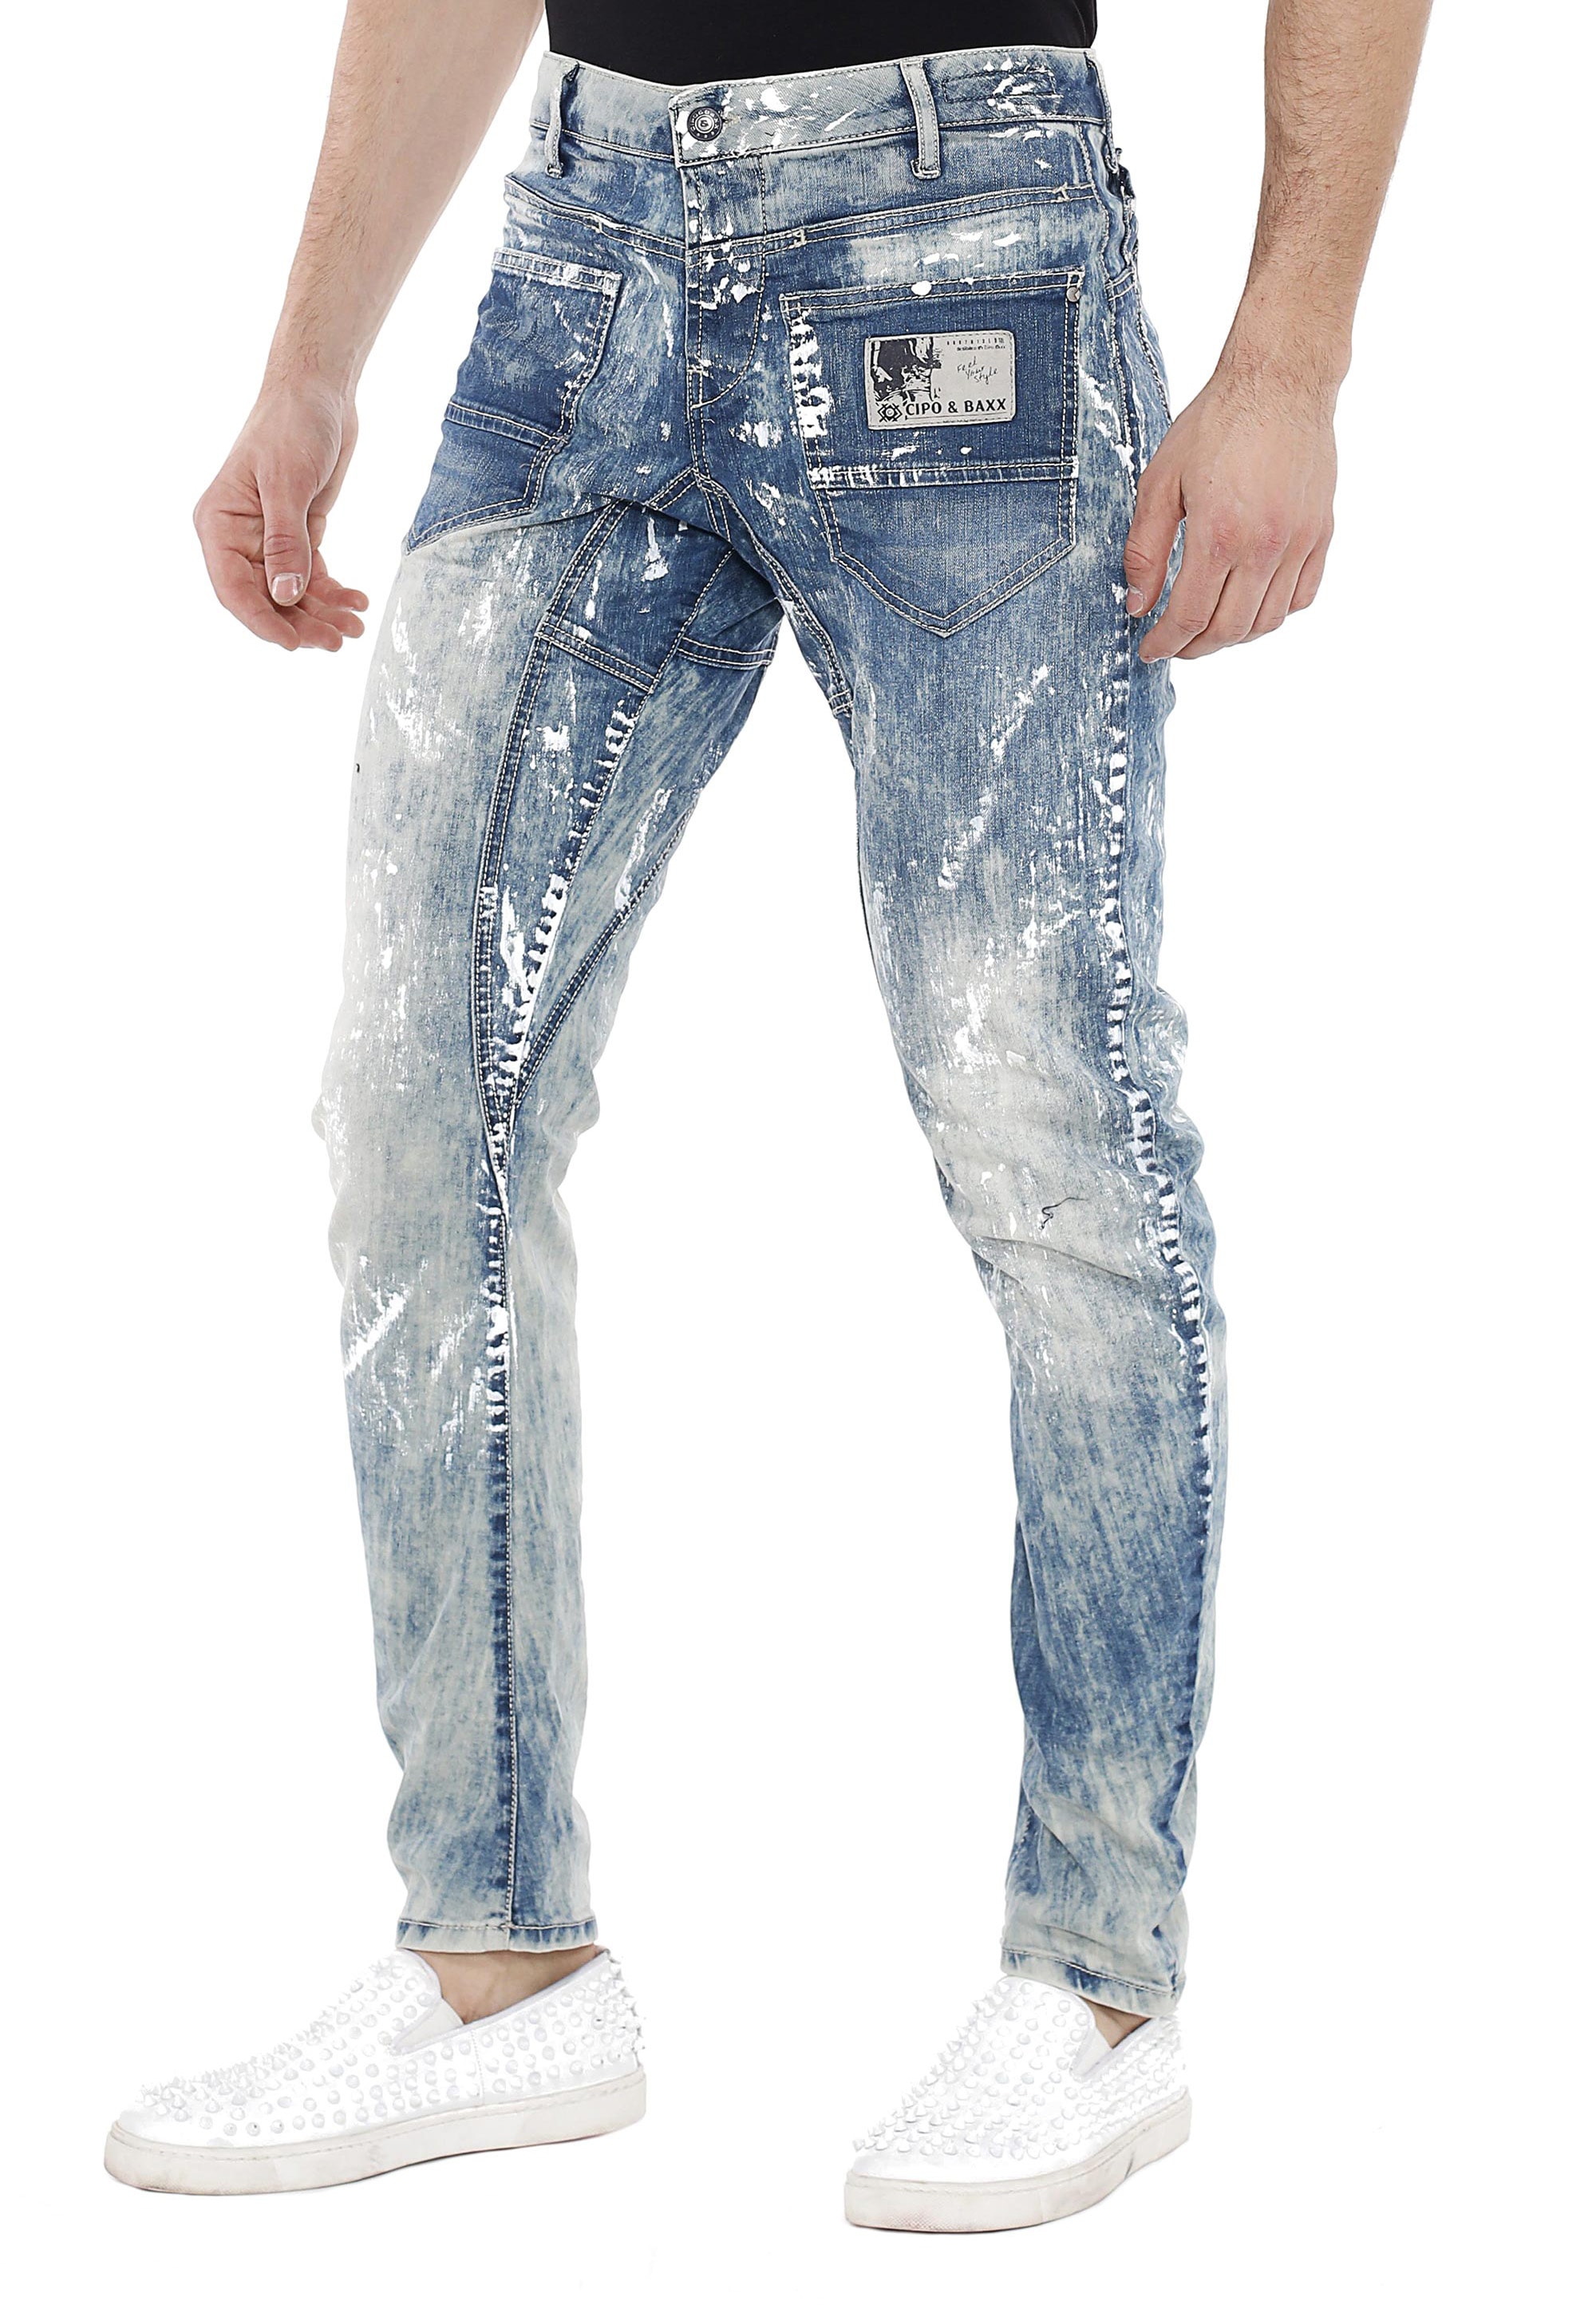 Bequeme Jeans, mit coolen Farbspots